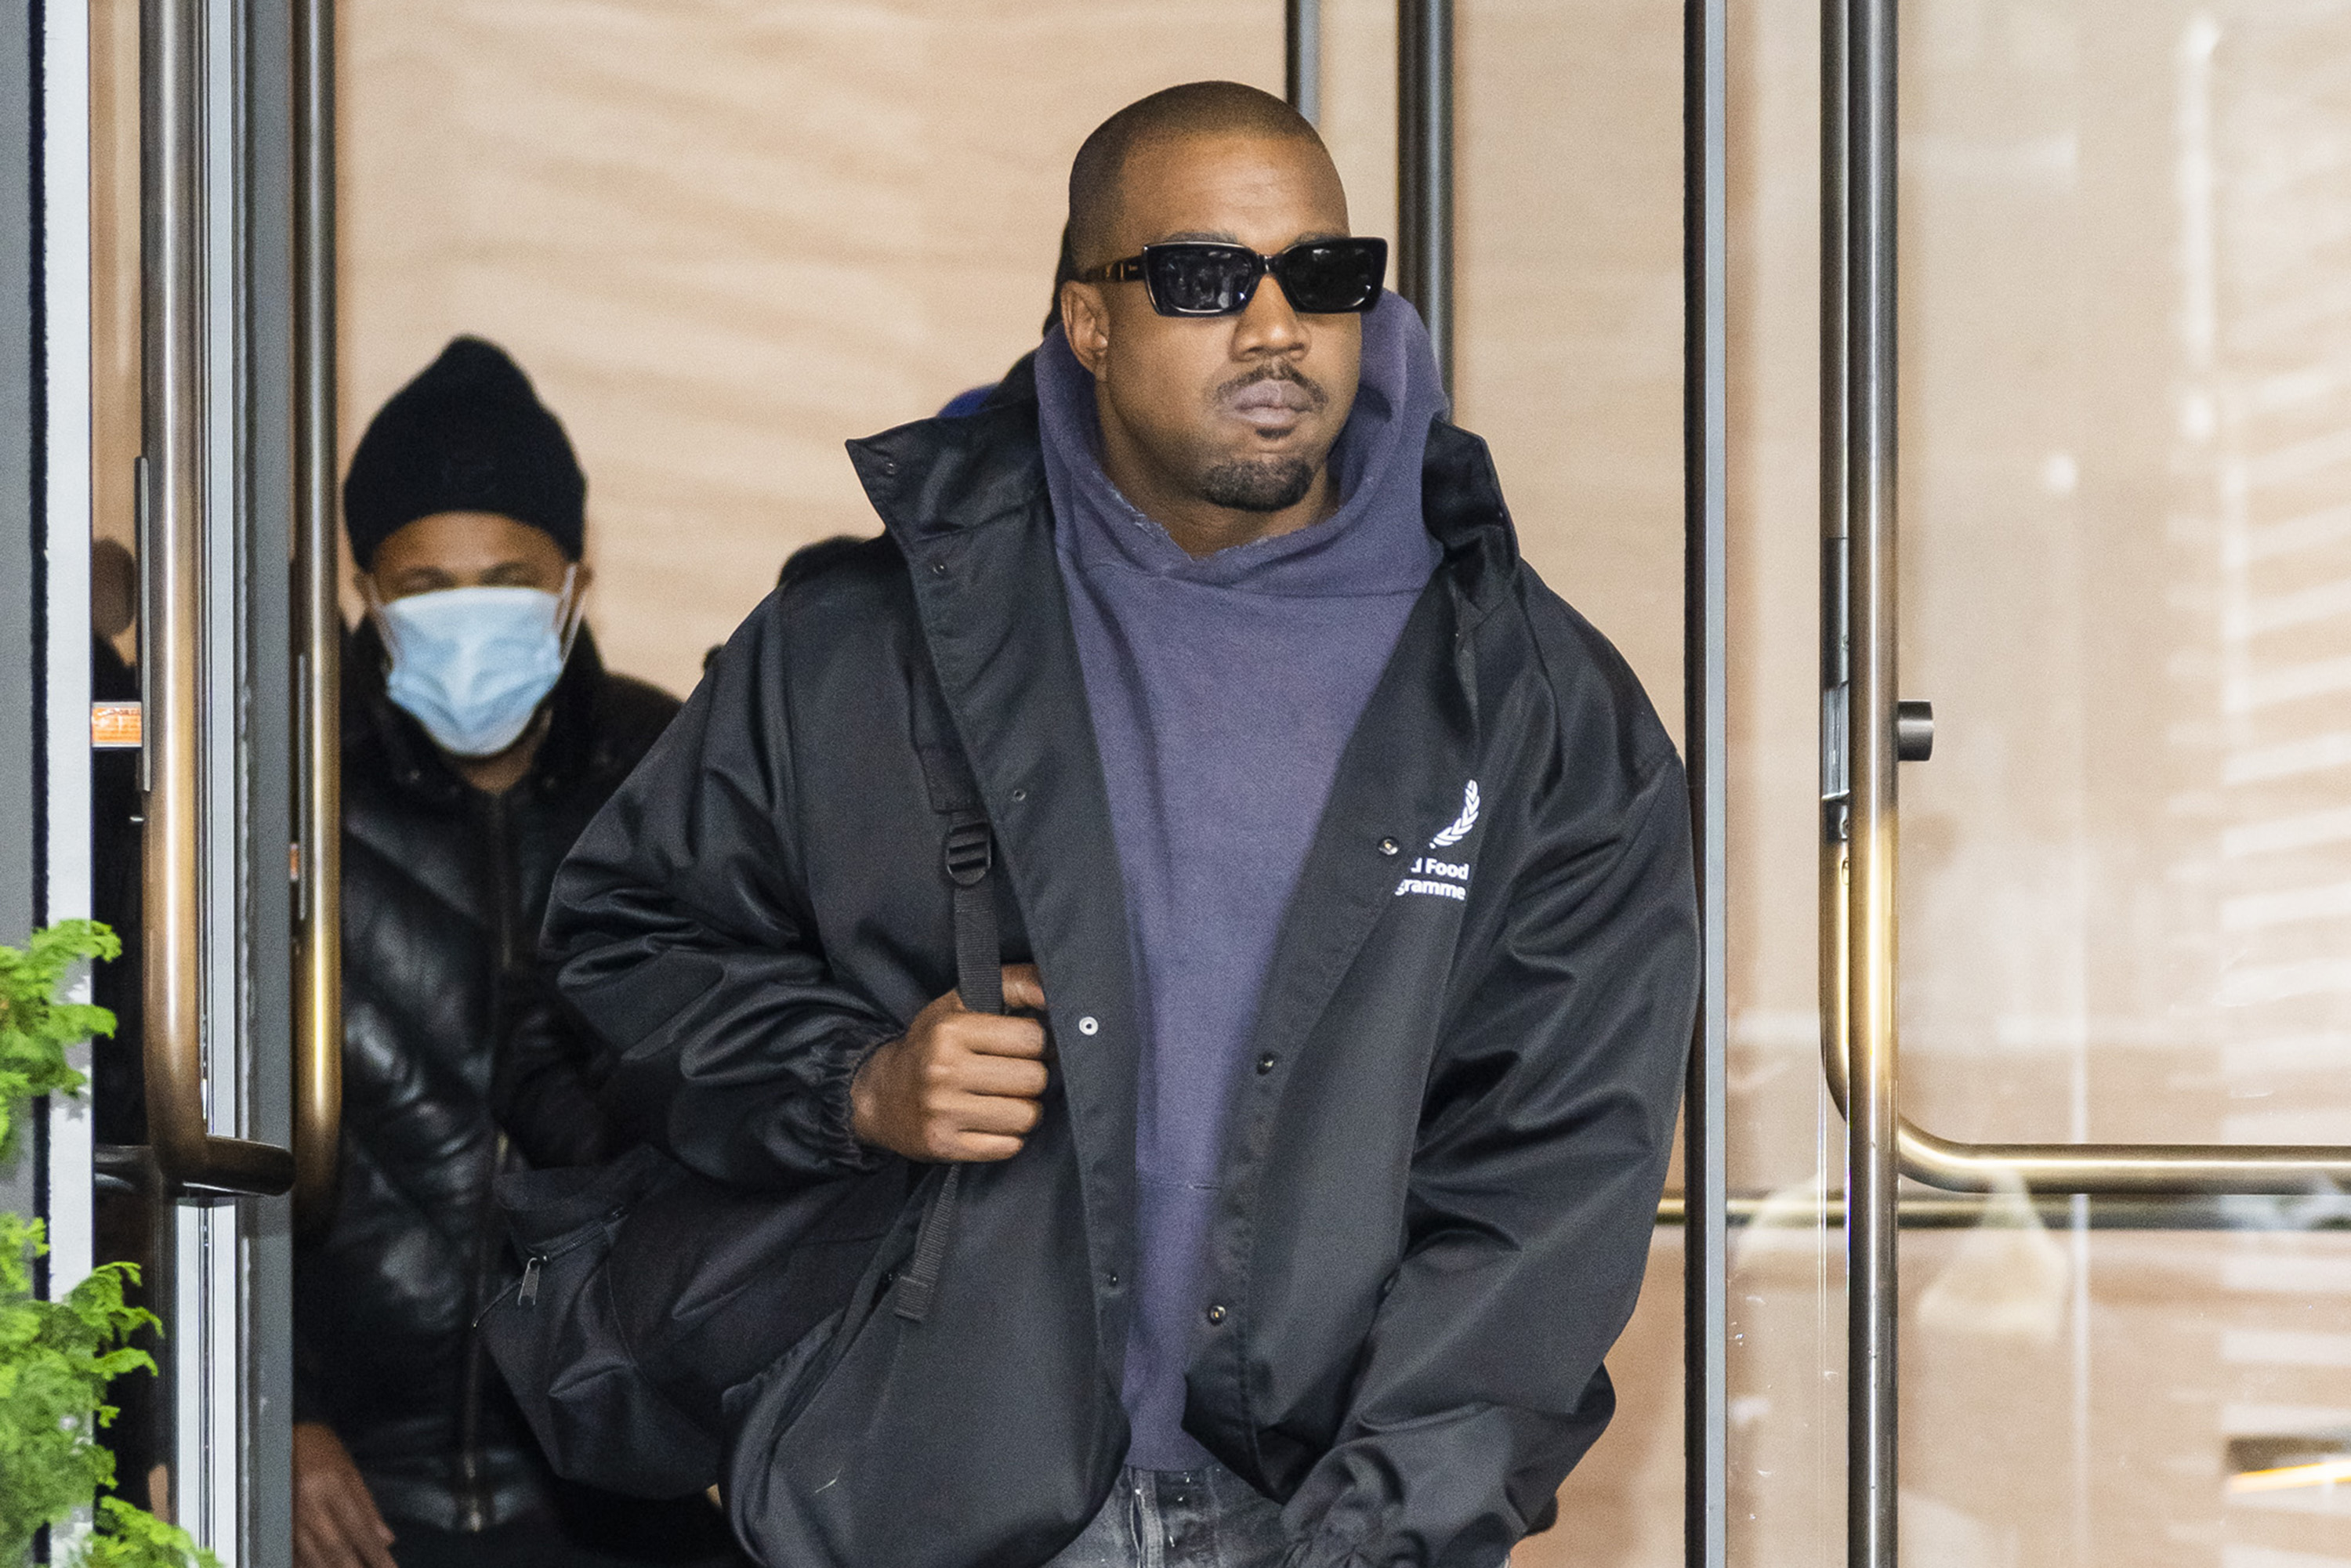 Kanye West is seen in Chelsea, New York dressed in a hoodie and black jacket